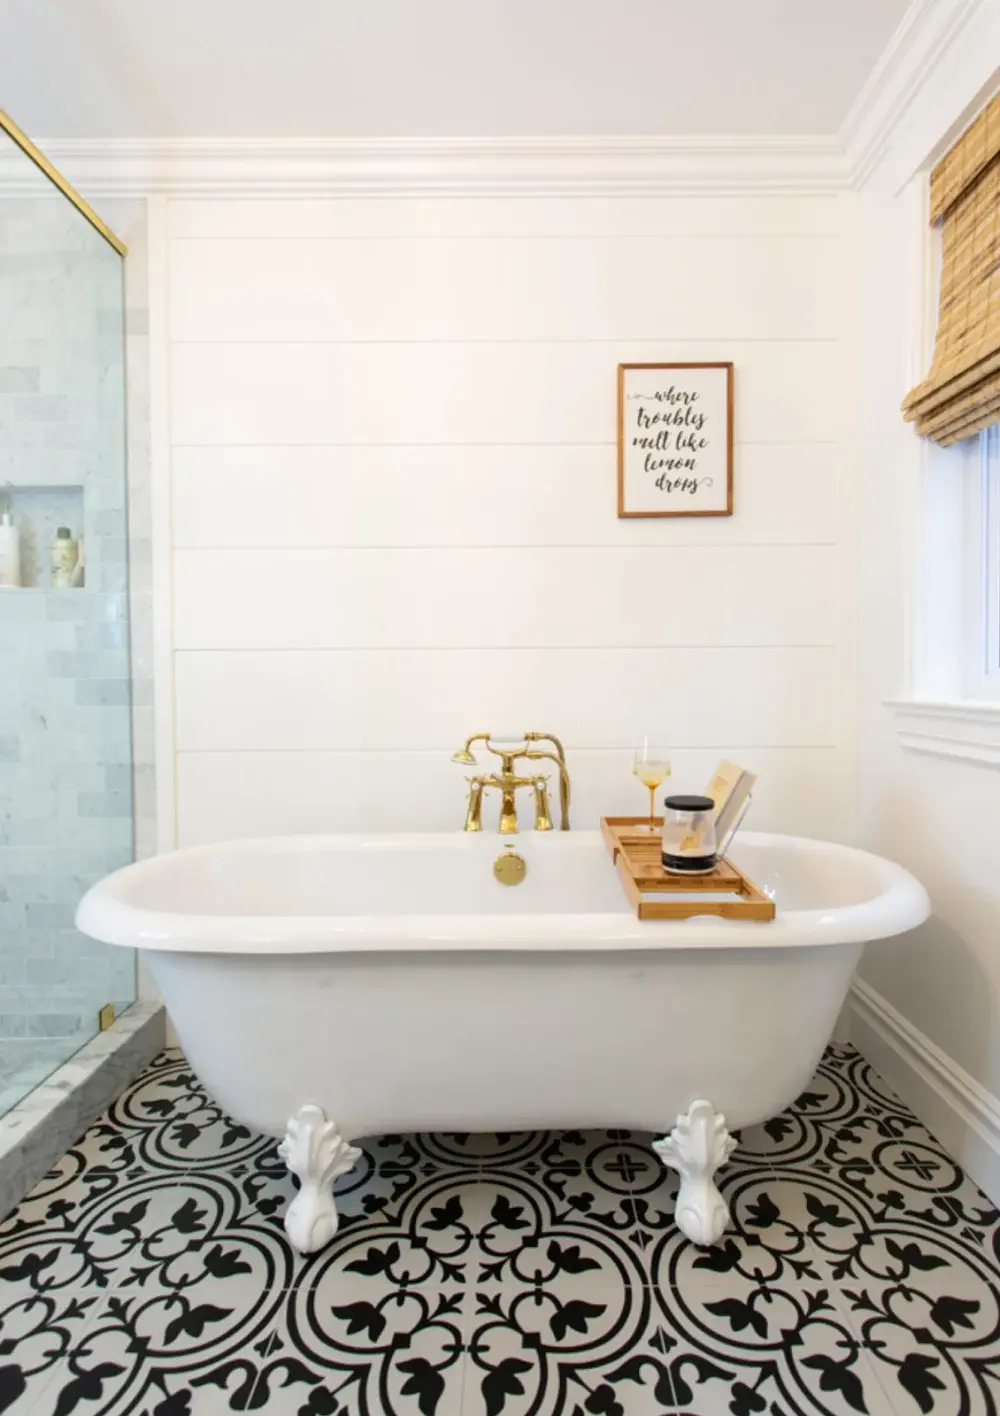 For Blog Only - Roxanne West, Bonjour Bliss - Shiplap Bathroom with Tile Floor